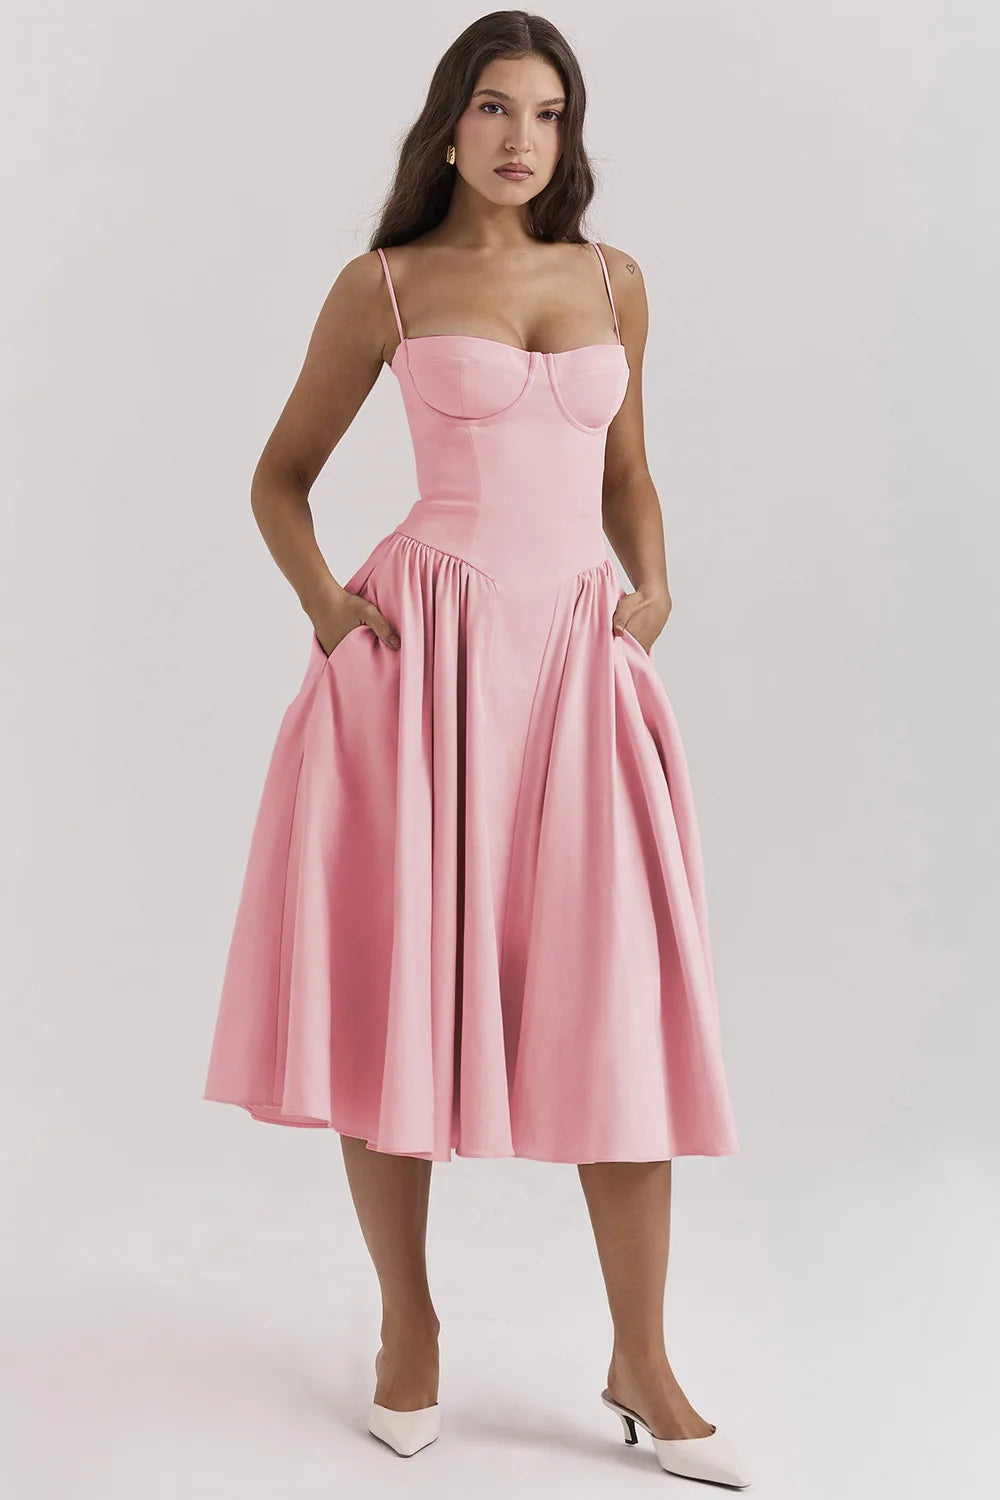 Rubi™ - Elegant kjole